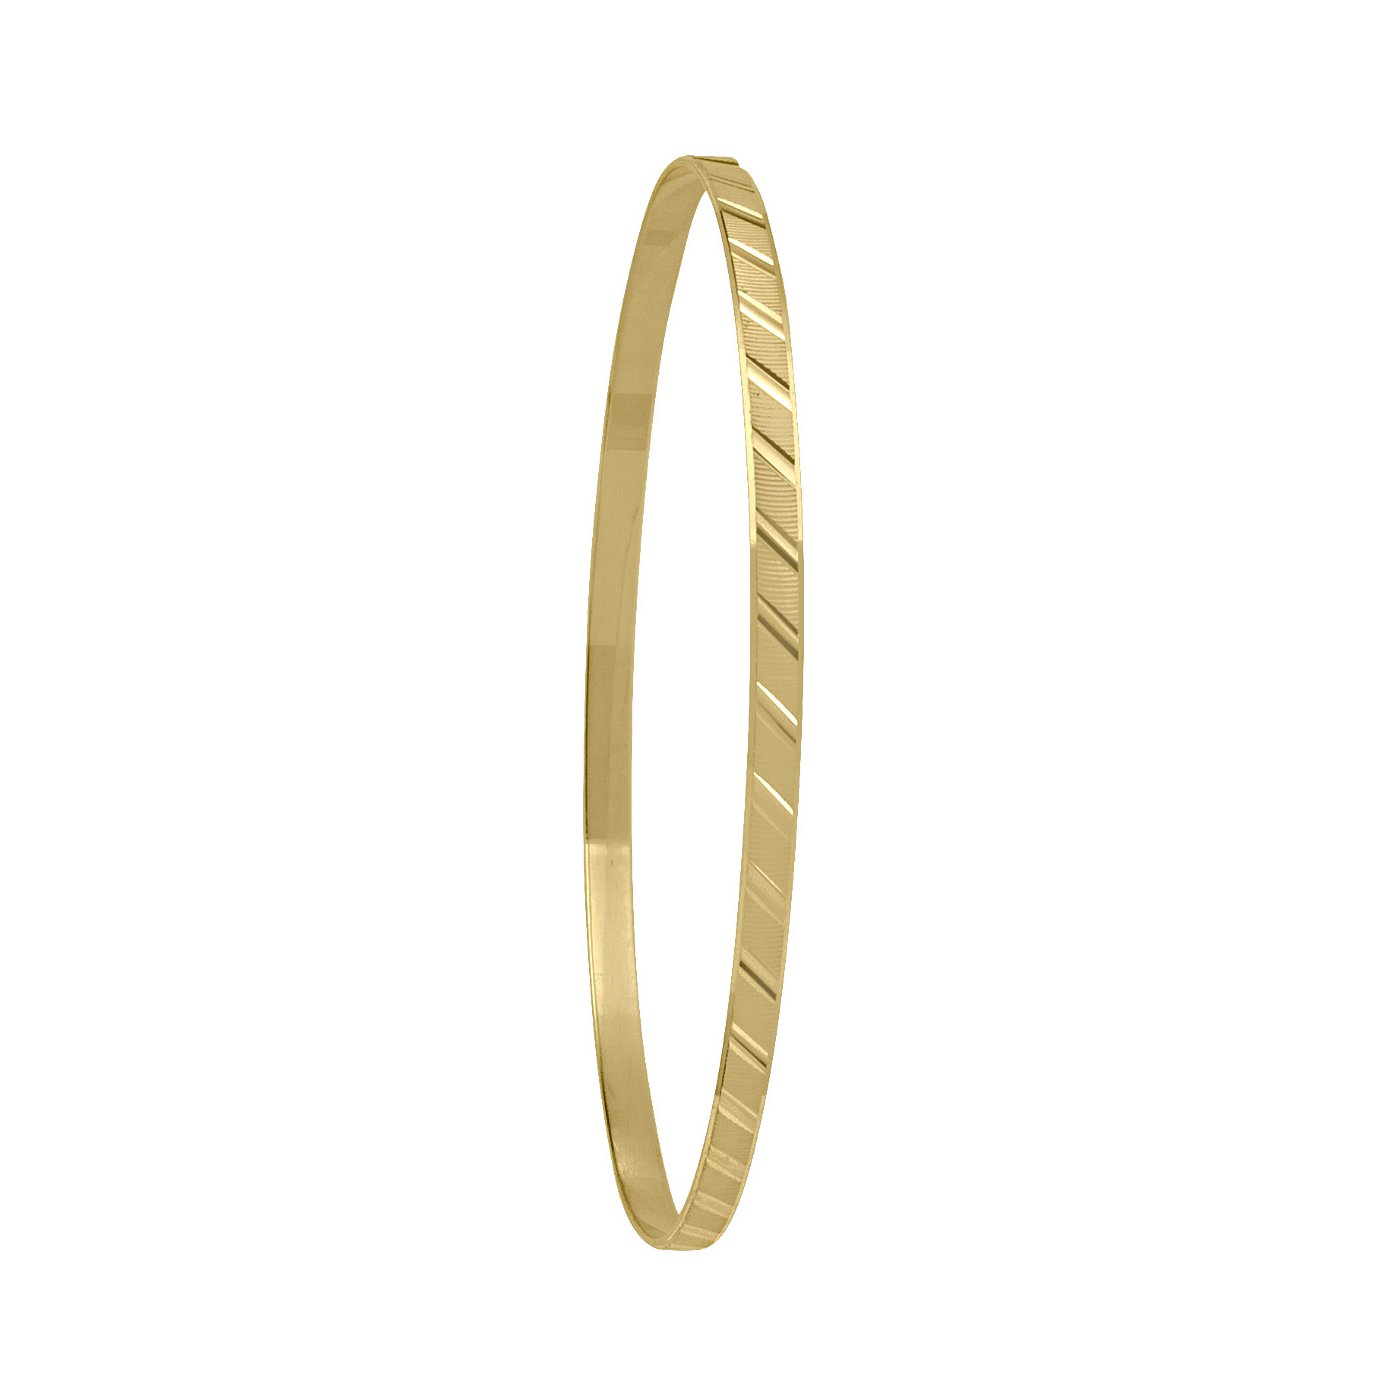 Genuine 10K Gold Bangle Bracelet 7inch Ladies Gold Bangle - Etsy